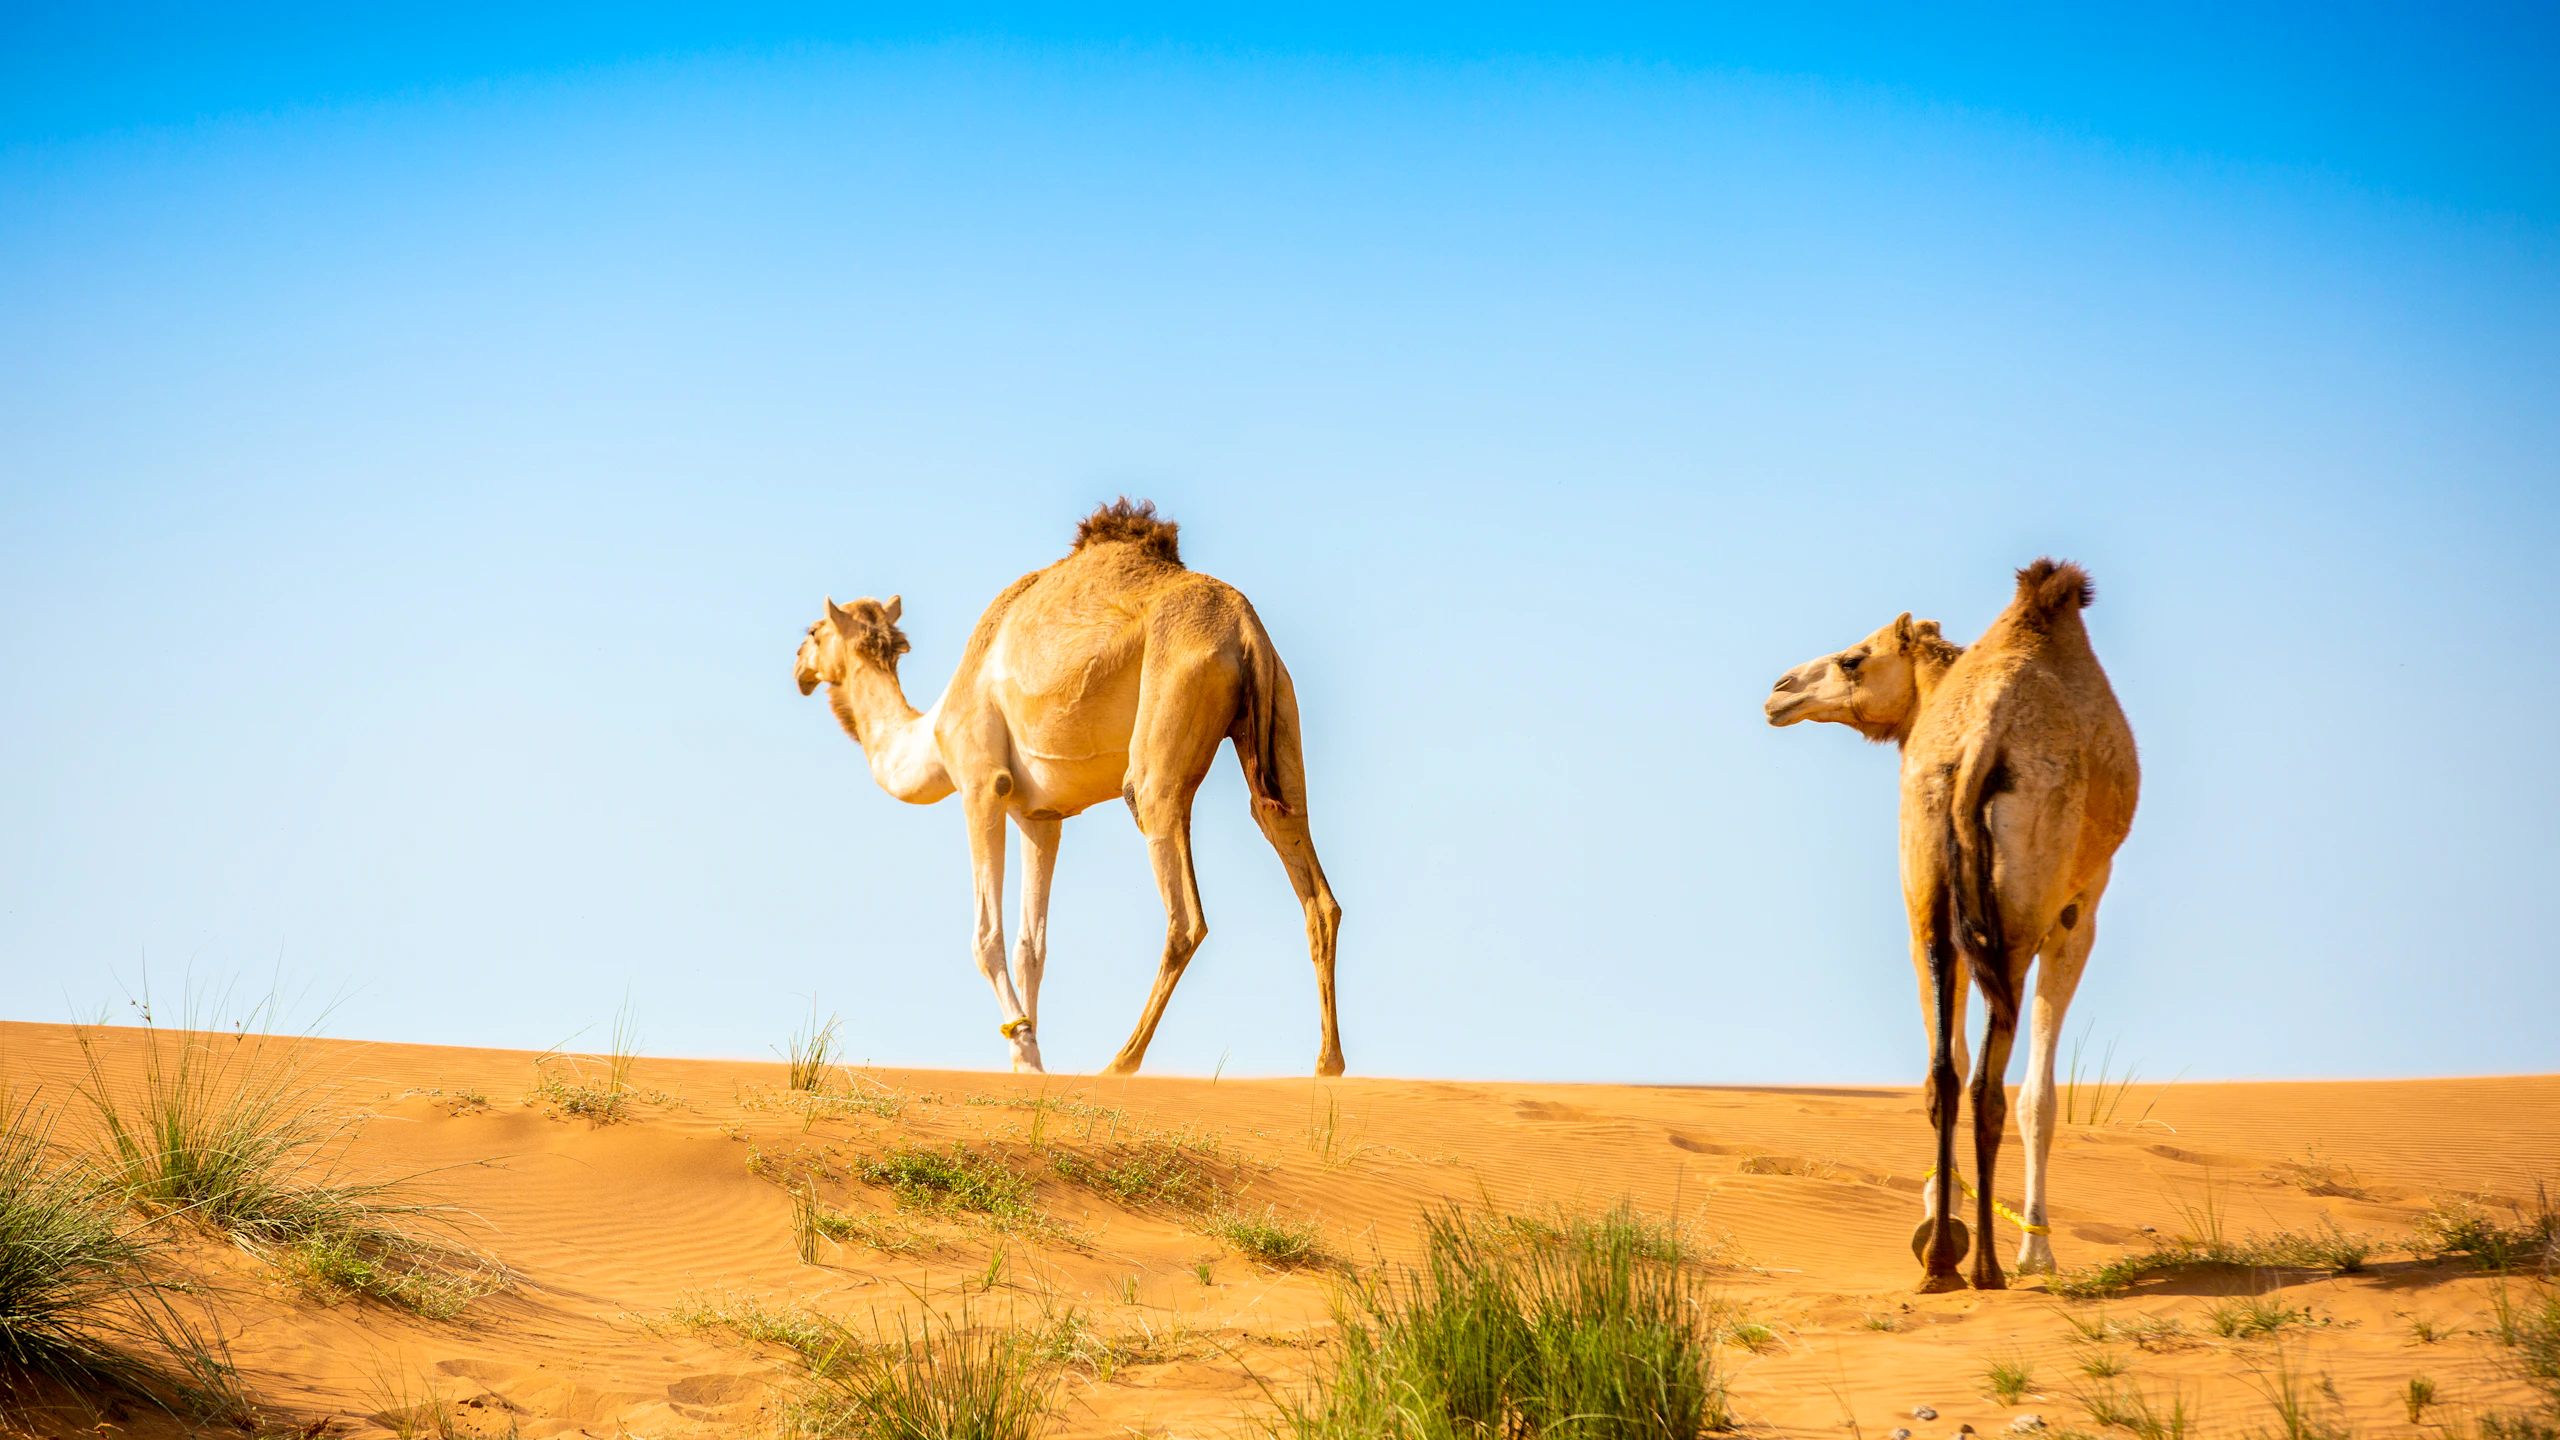 Morning Desert Safari - Camel & Date Farm Tour Price